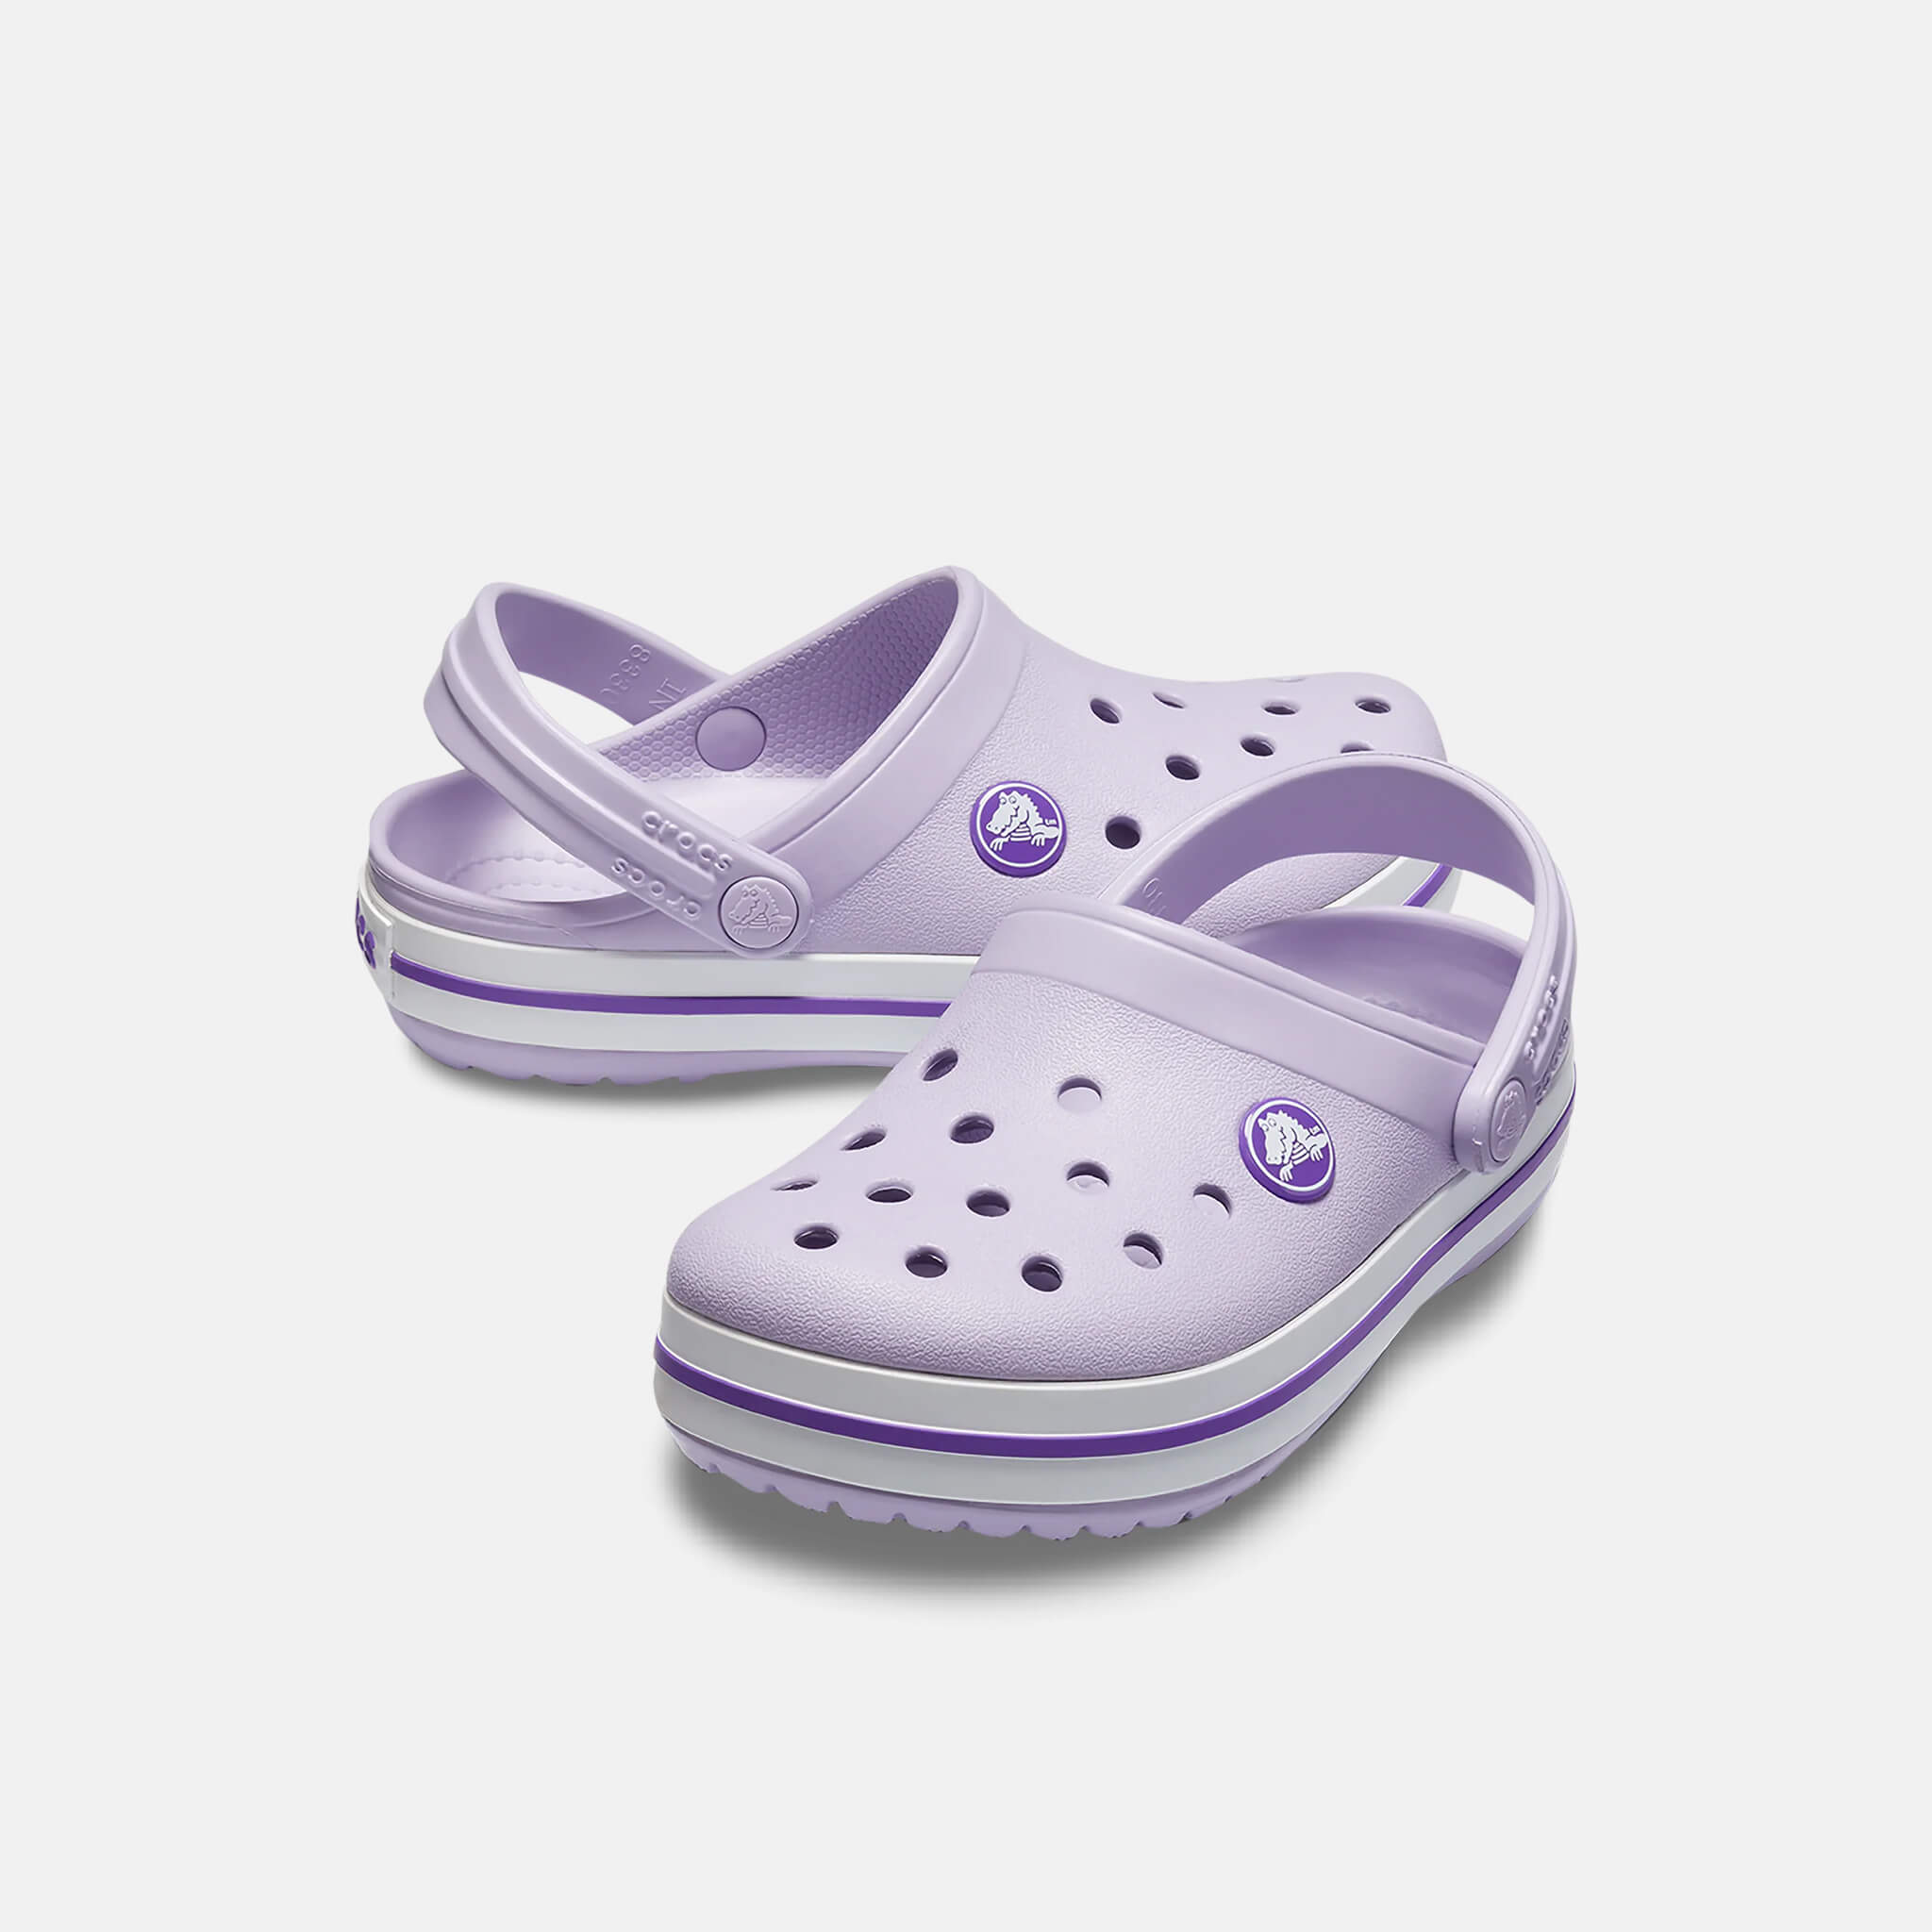 Crocband Clog K Lavender/Neon Purple